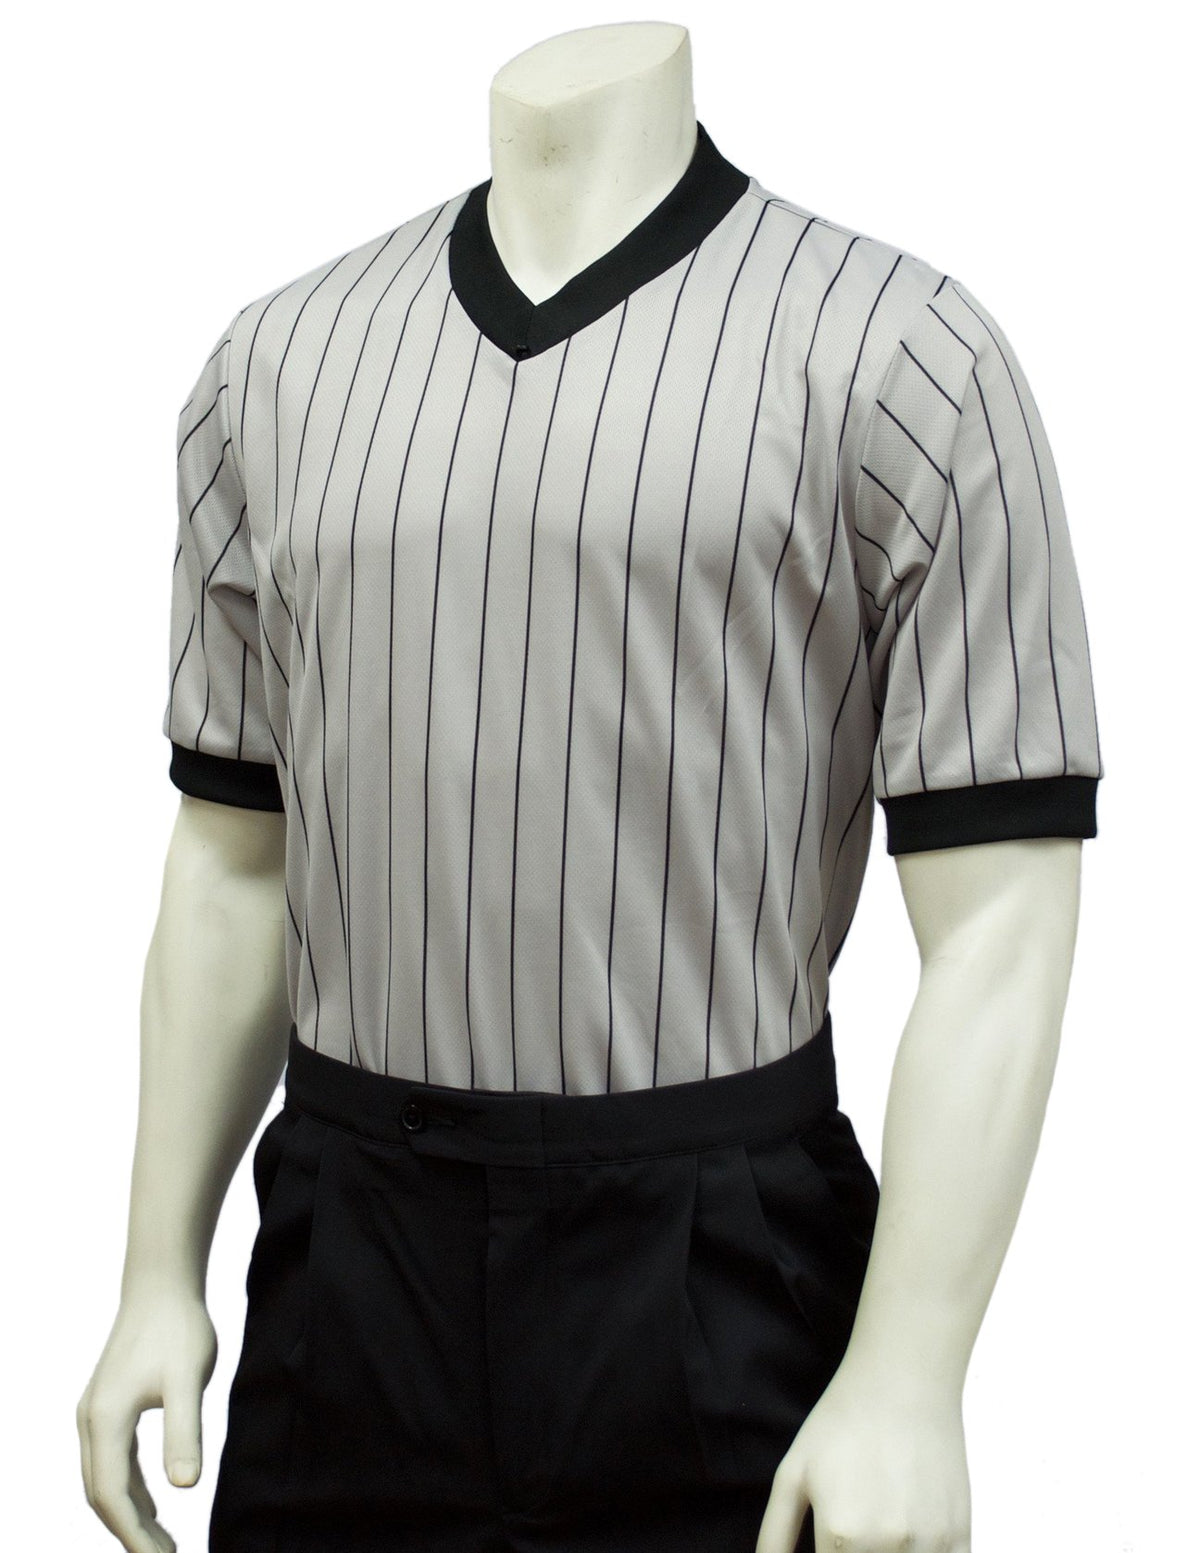 Smitty | BKS-204 | Elite Performance Interlock Gray w/ Black Pinstripes Shirt